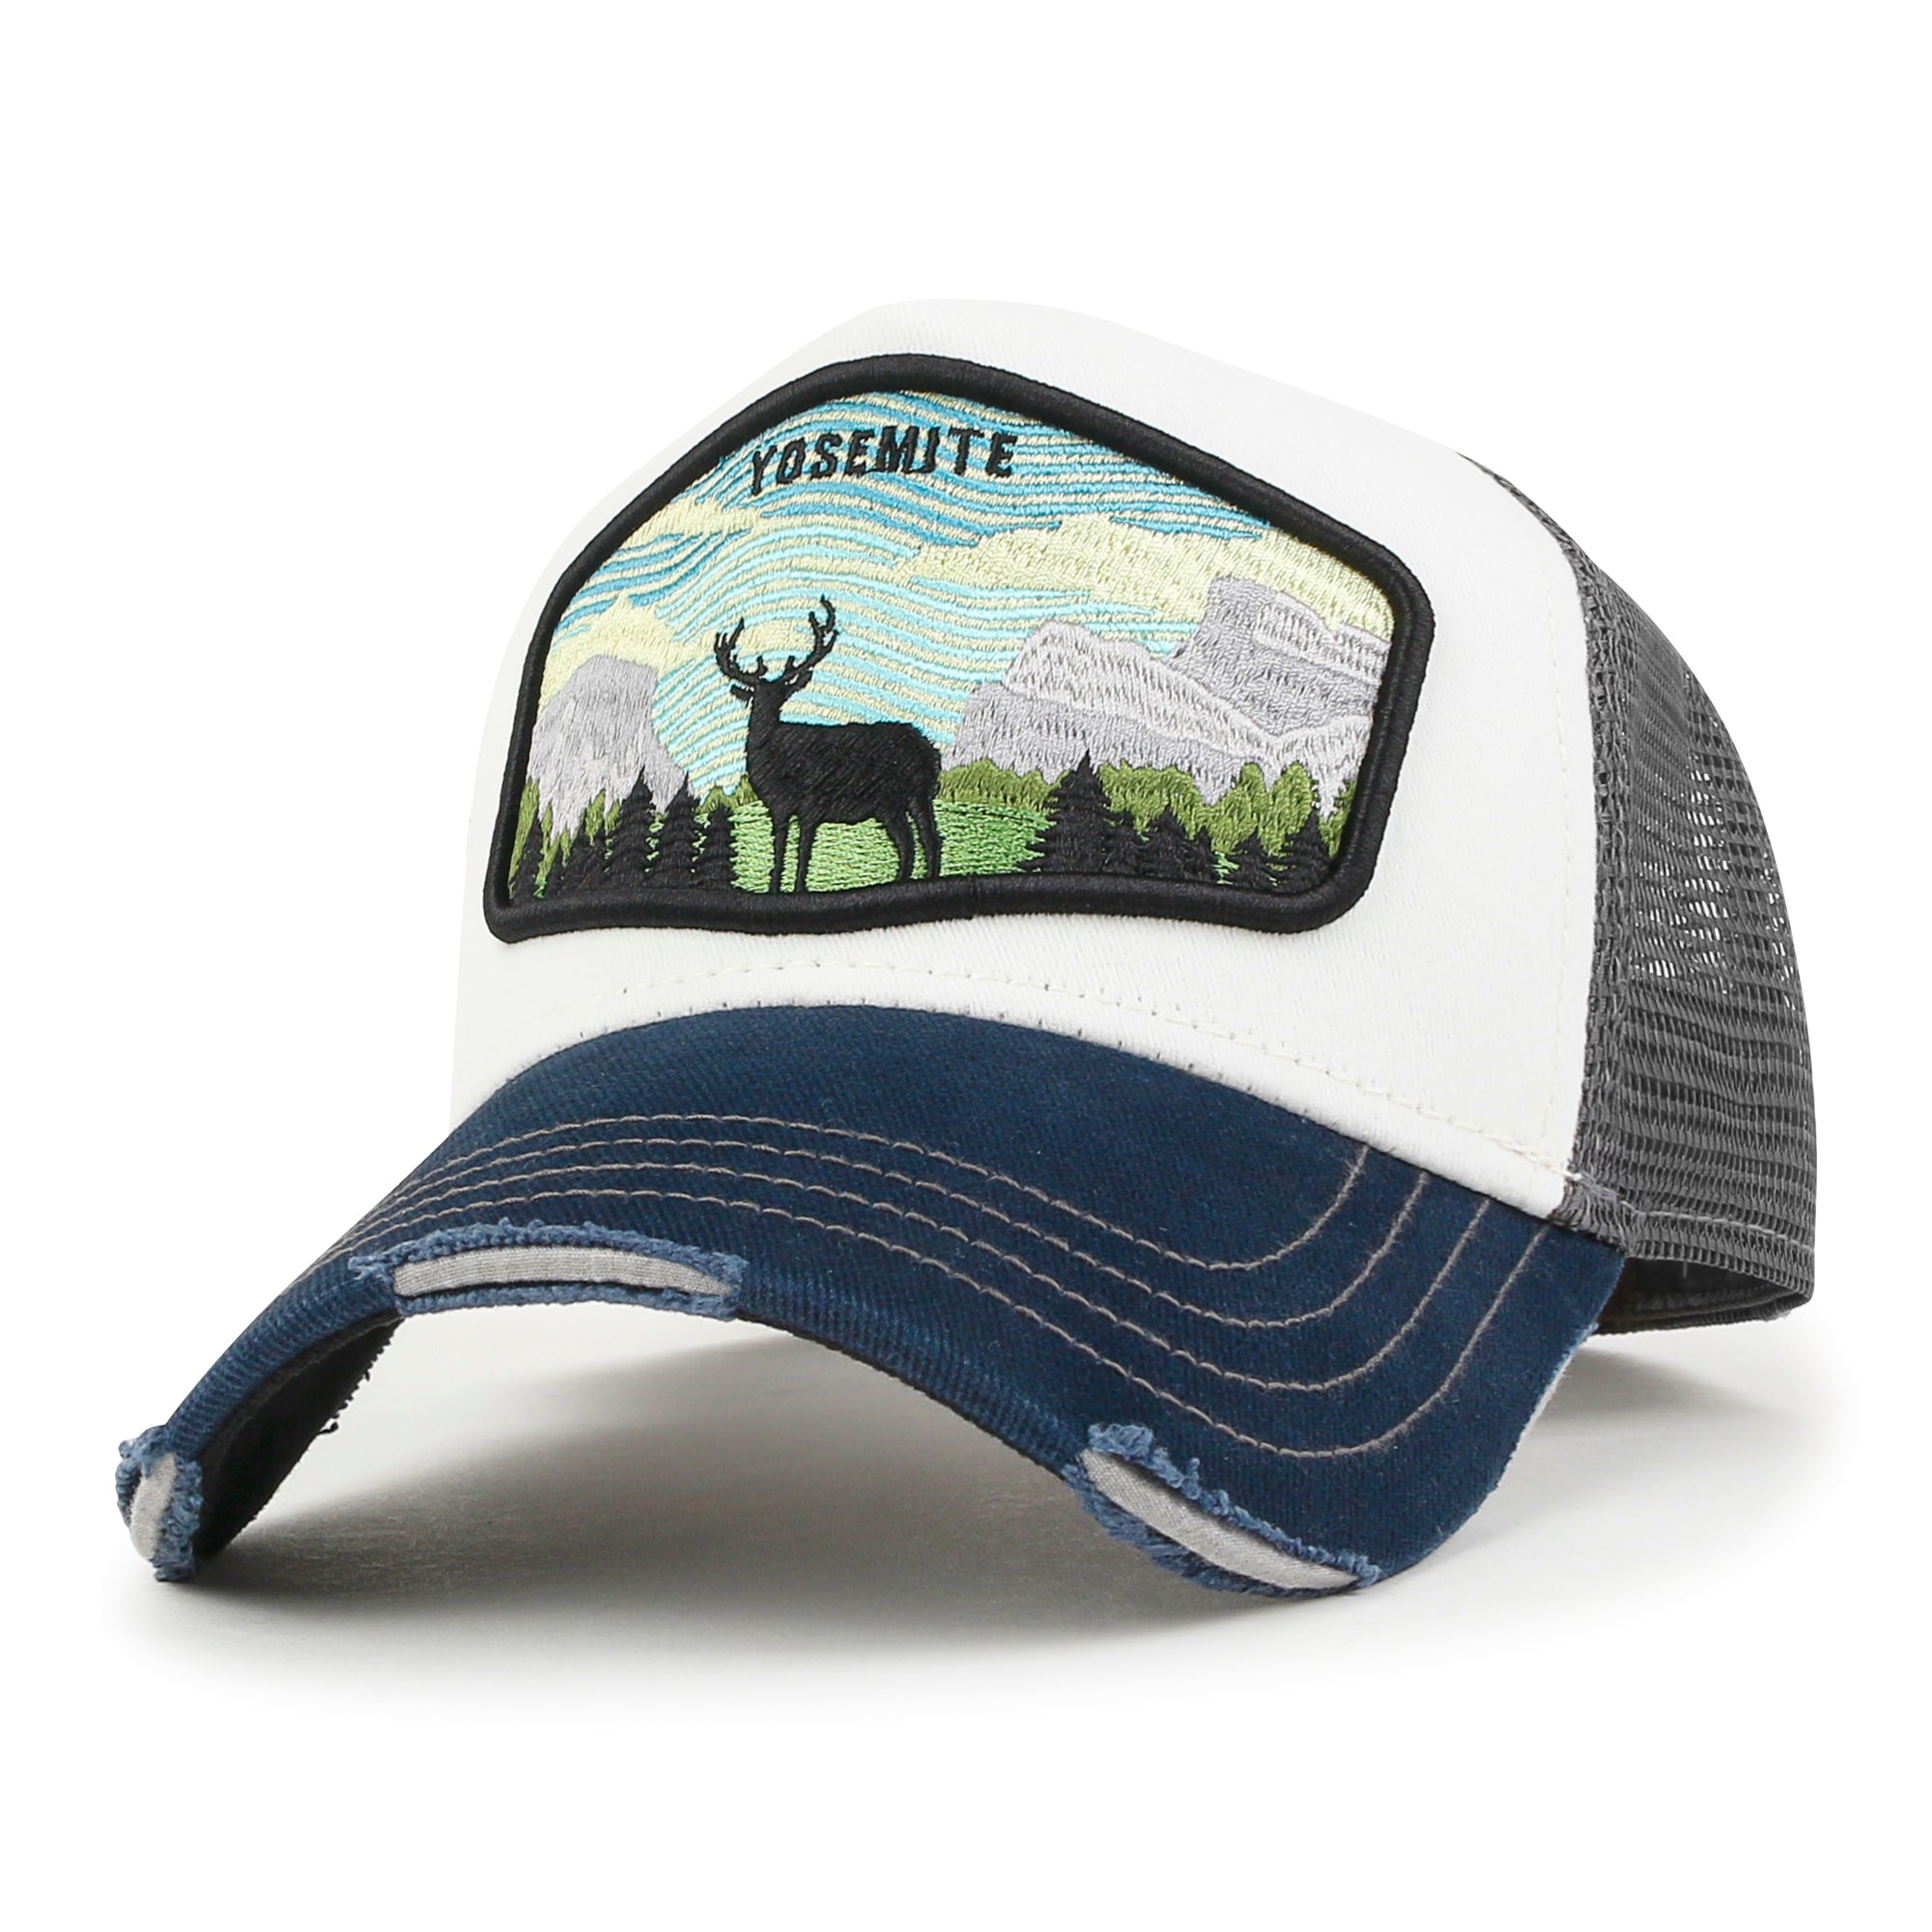 Yosemite Baseball Structured Casual Tru Embroidery Cap Premium ililily